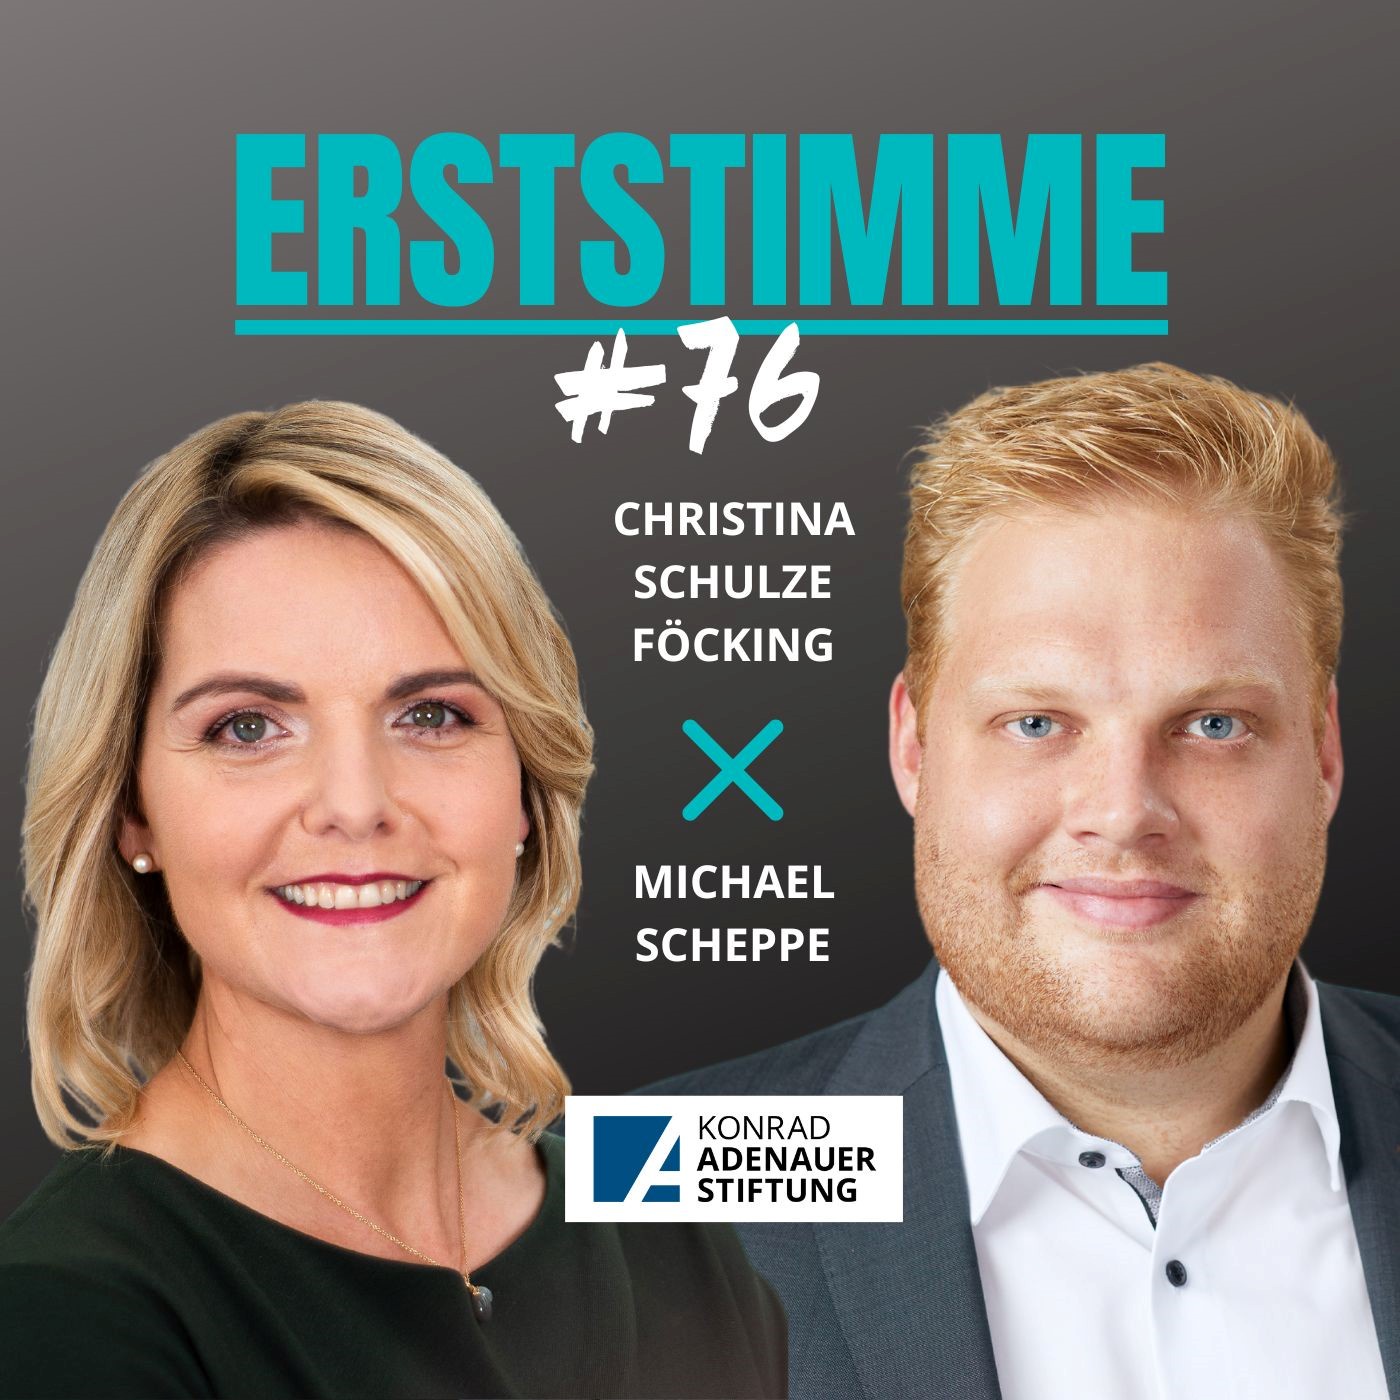 Erststimme #76: Christina Schulze Föcking